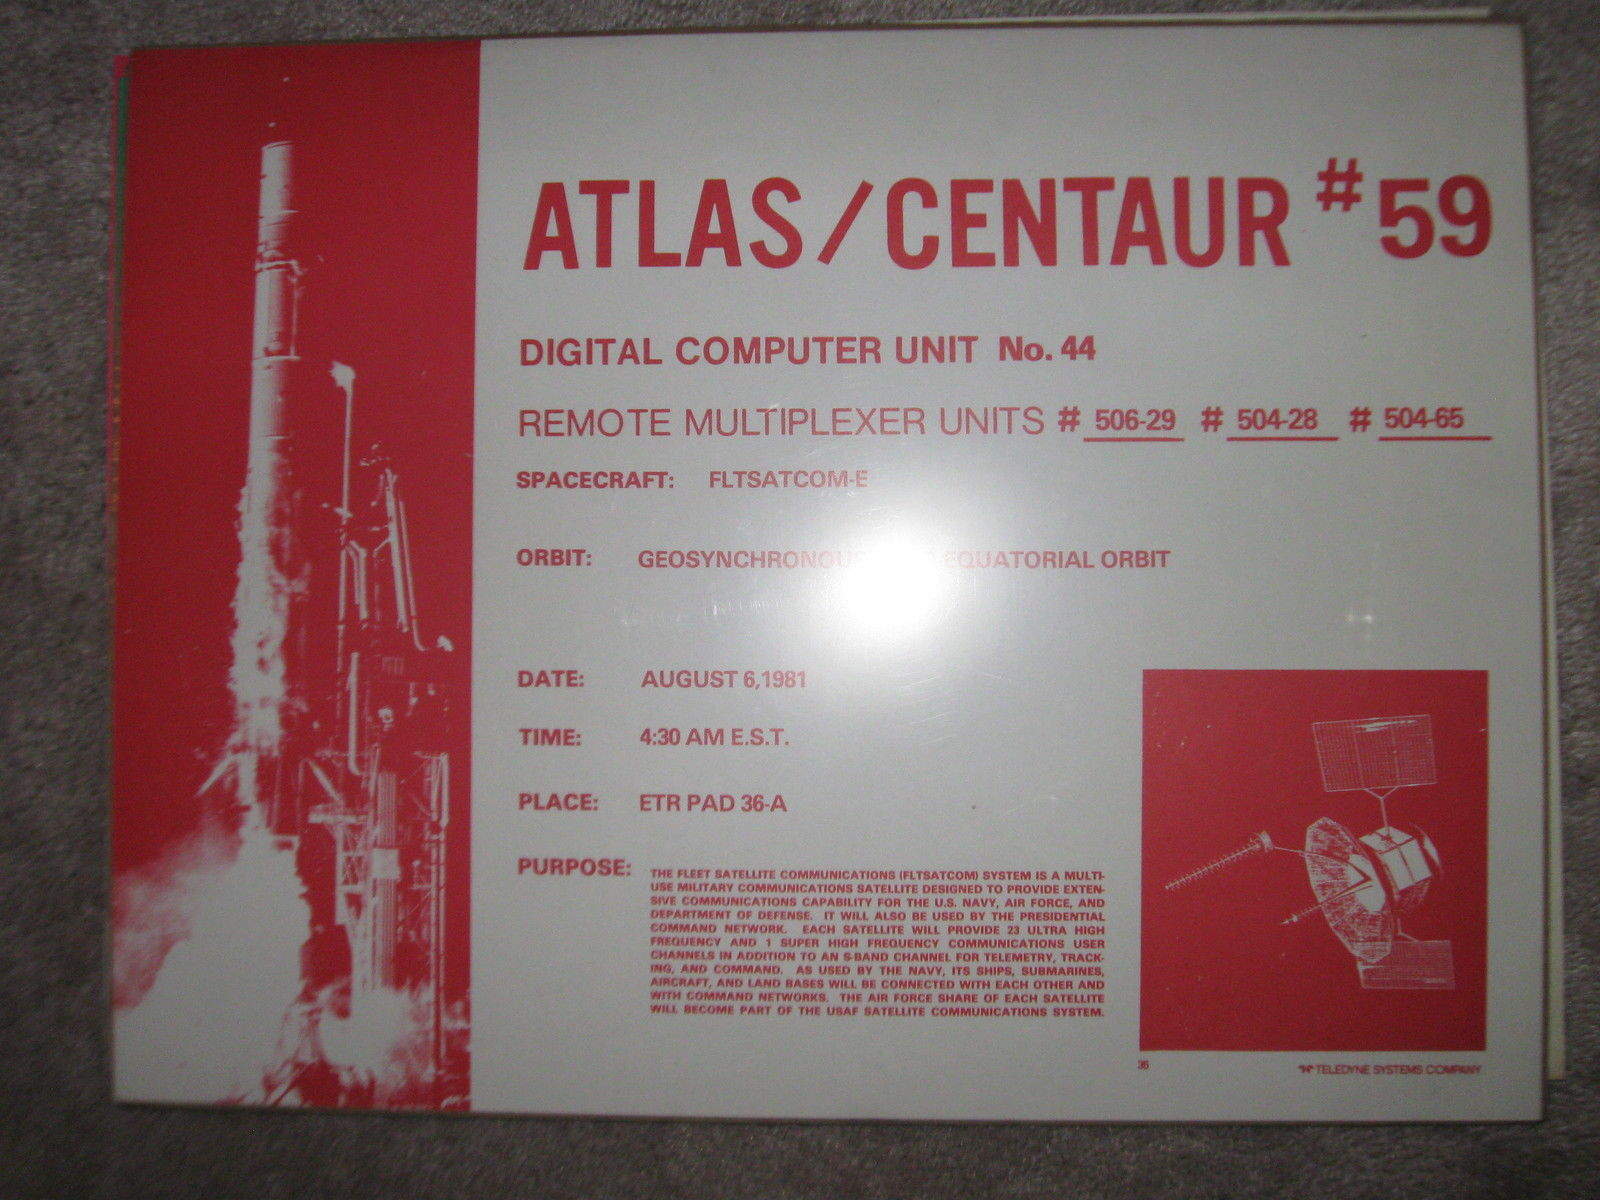 Atlas / Centaur #59 launch poster